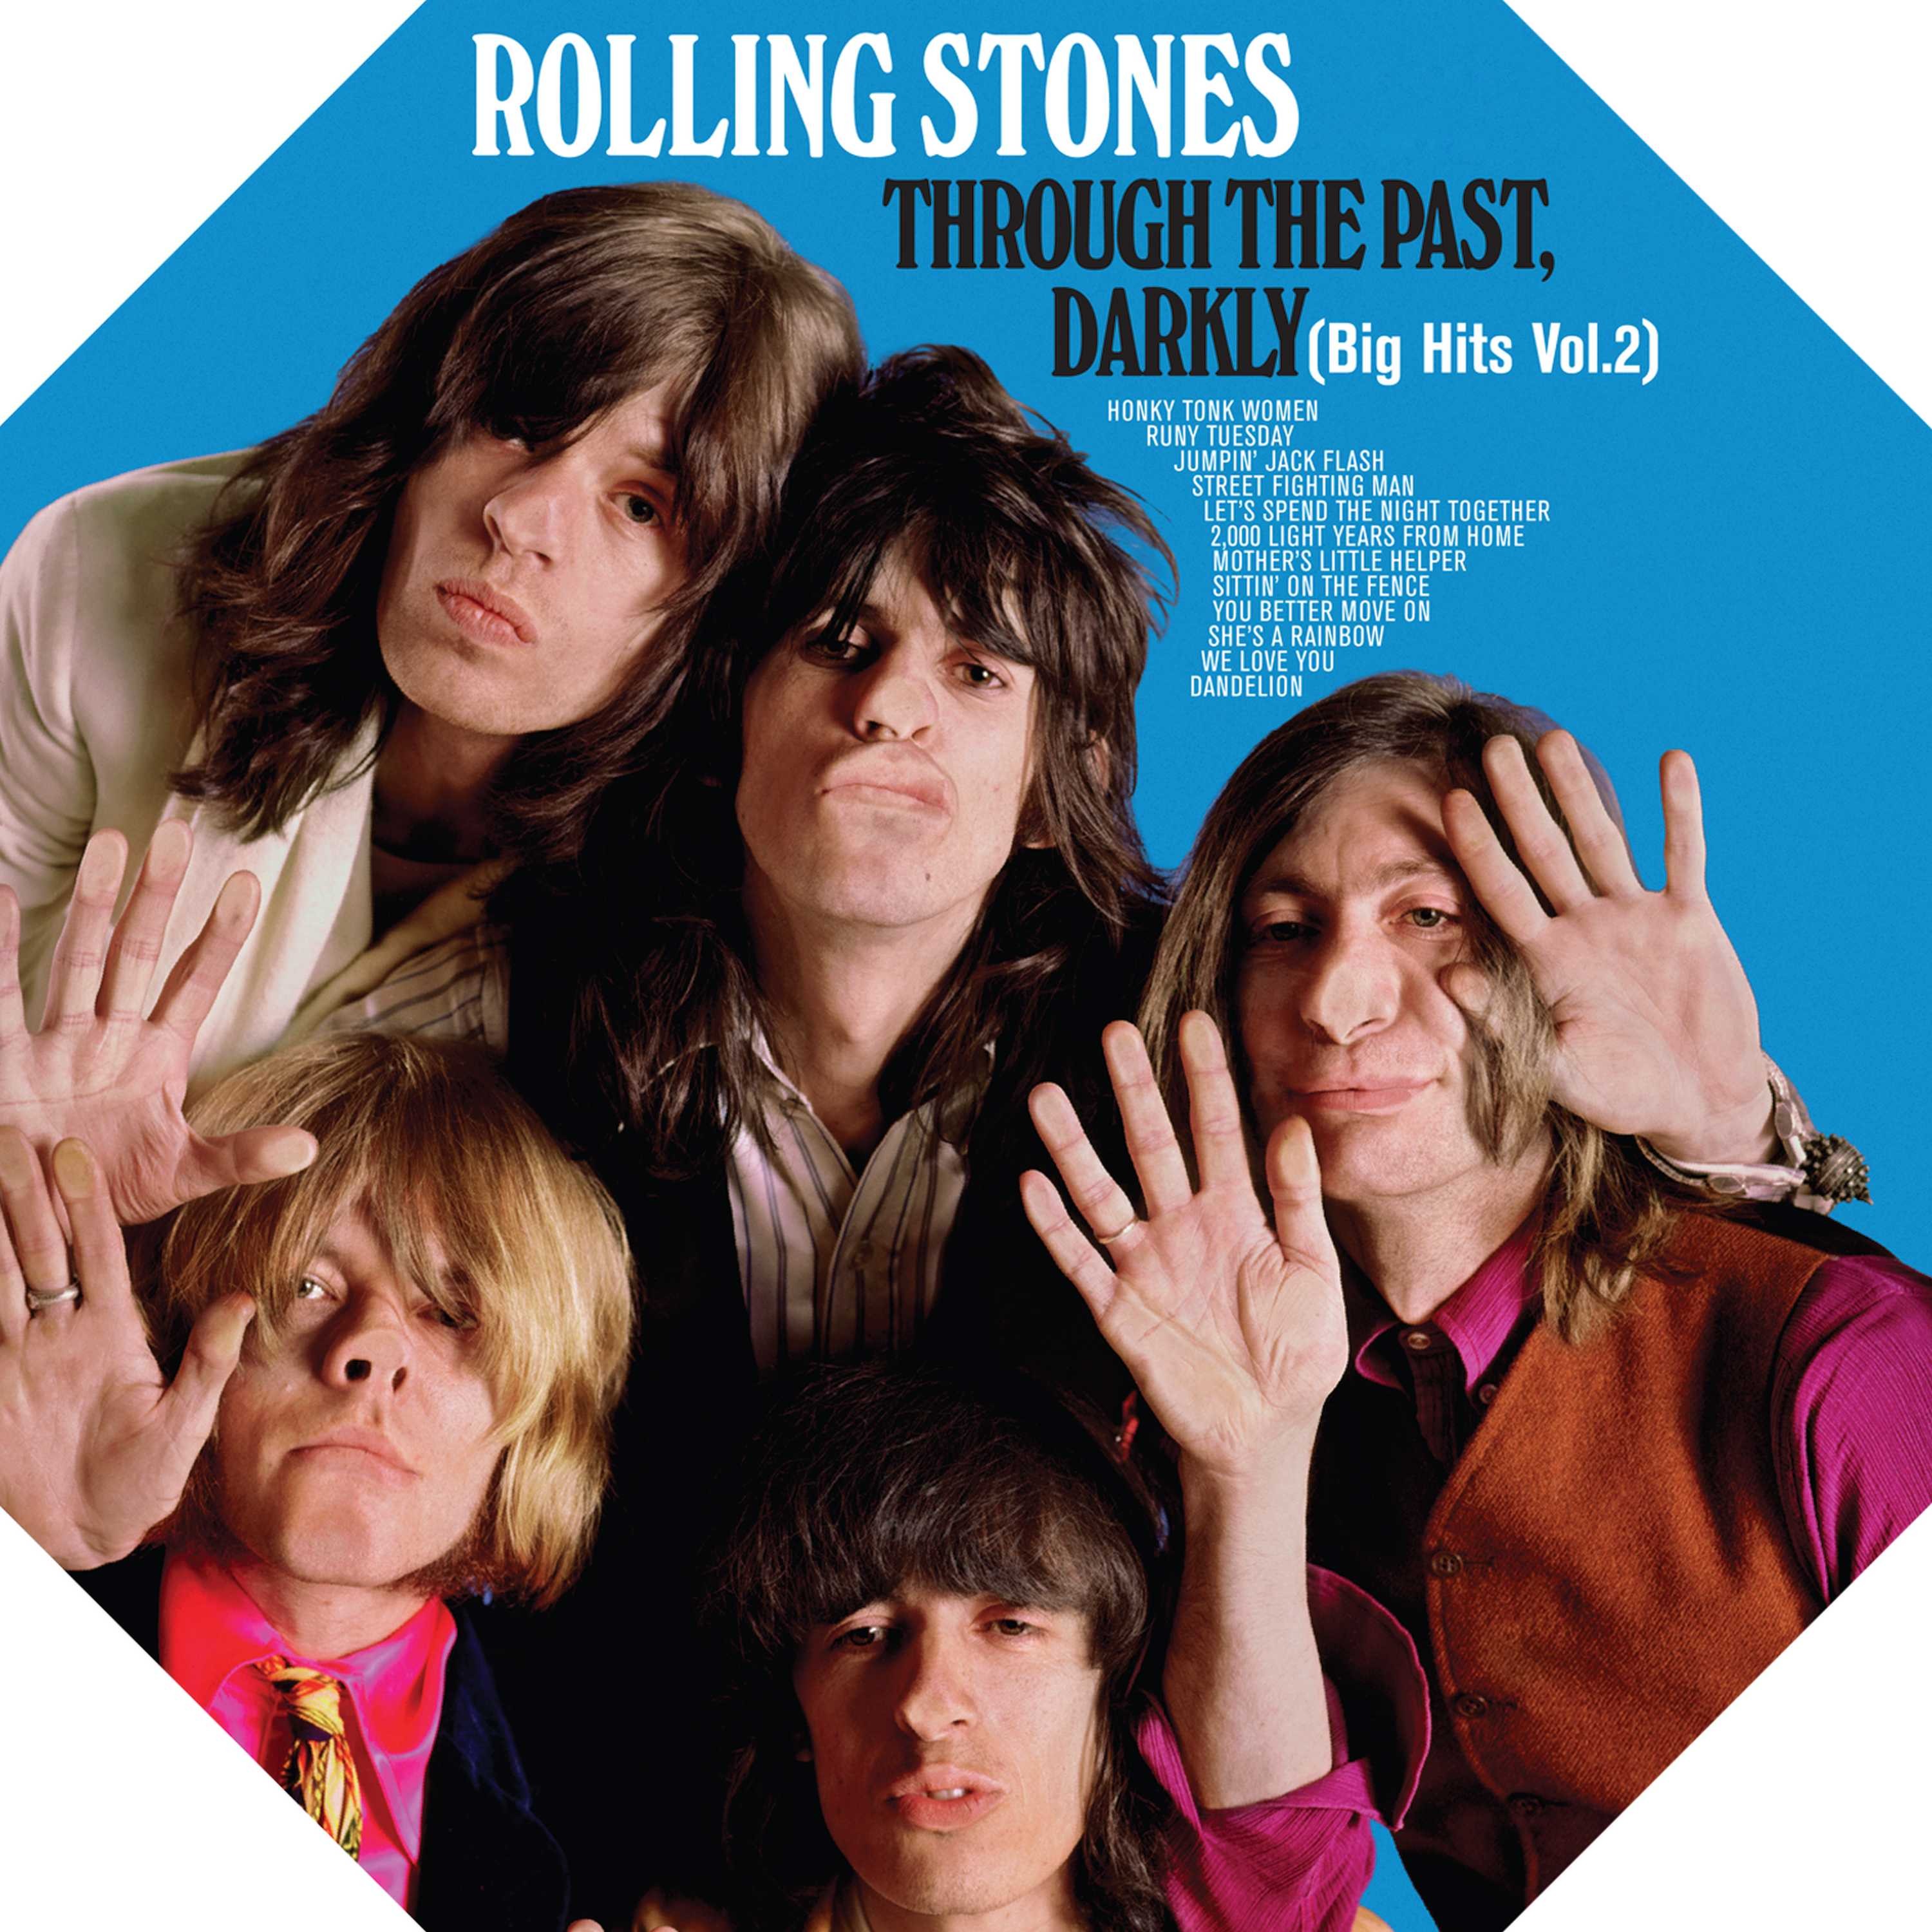 The Rolling Stones - Through The Past, Darkly LP